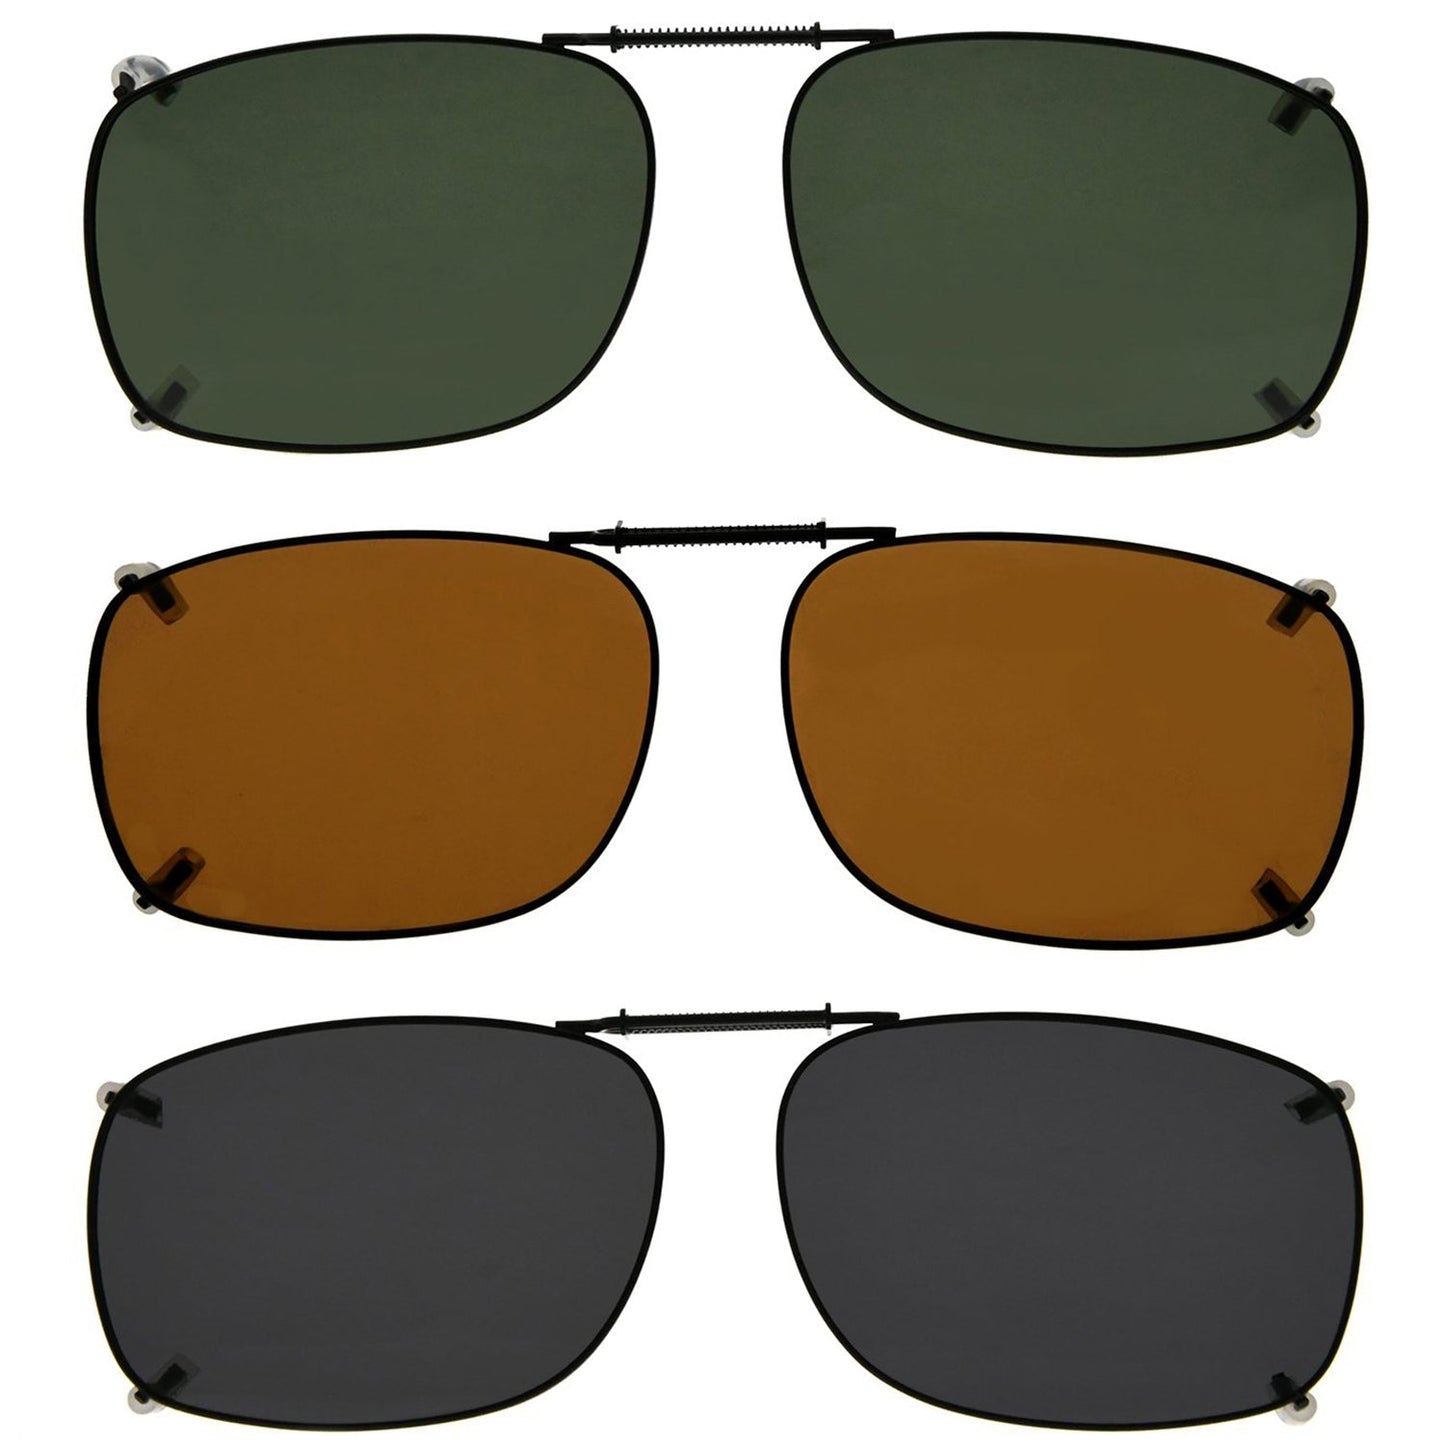 Retro Rectanlge Sunglasses Clip On Polarized C64